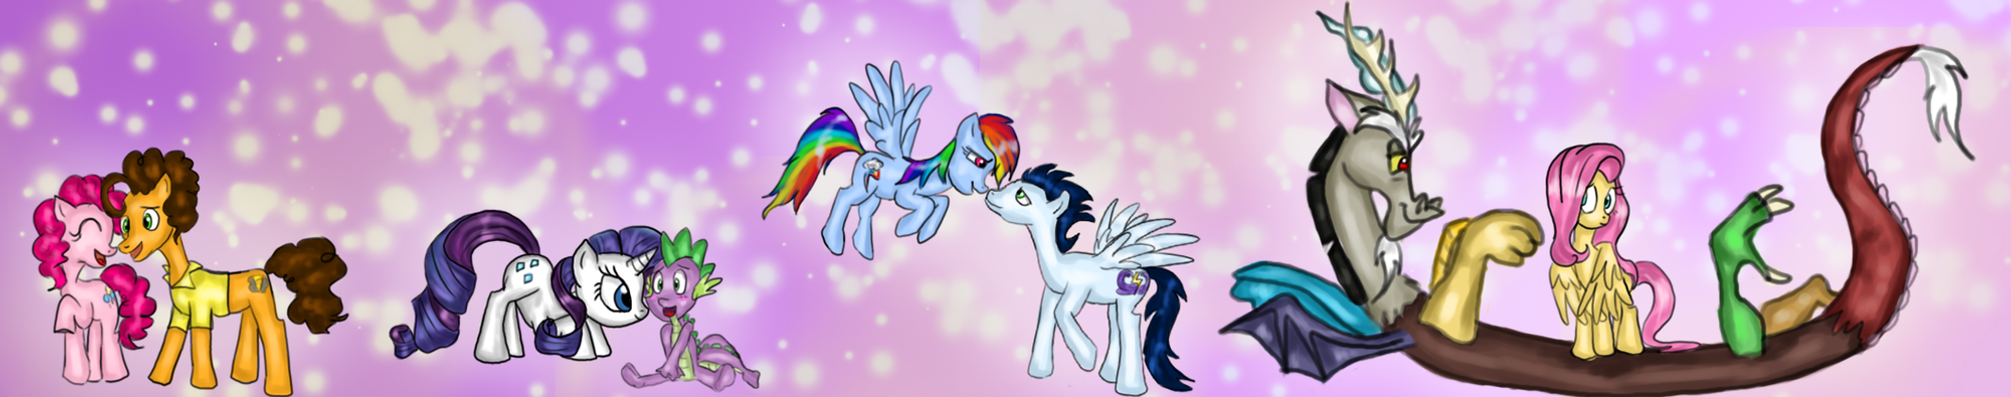 My Little Pony Couples By Birdhousebirdy On Deviantart